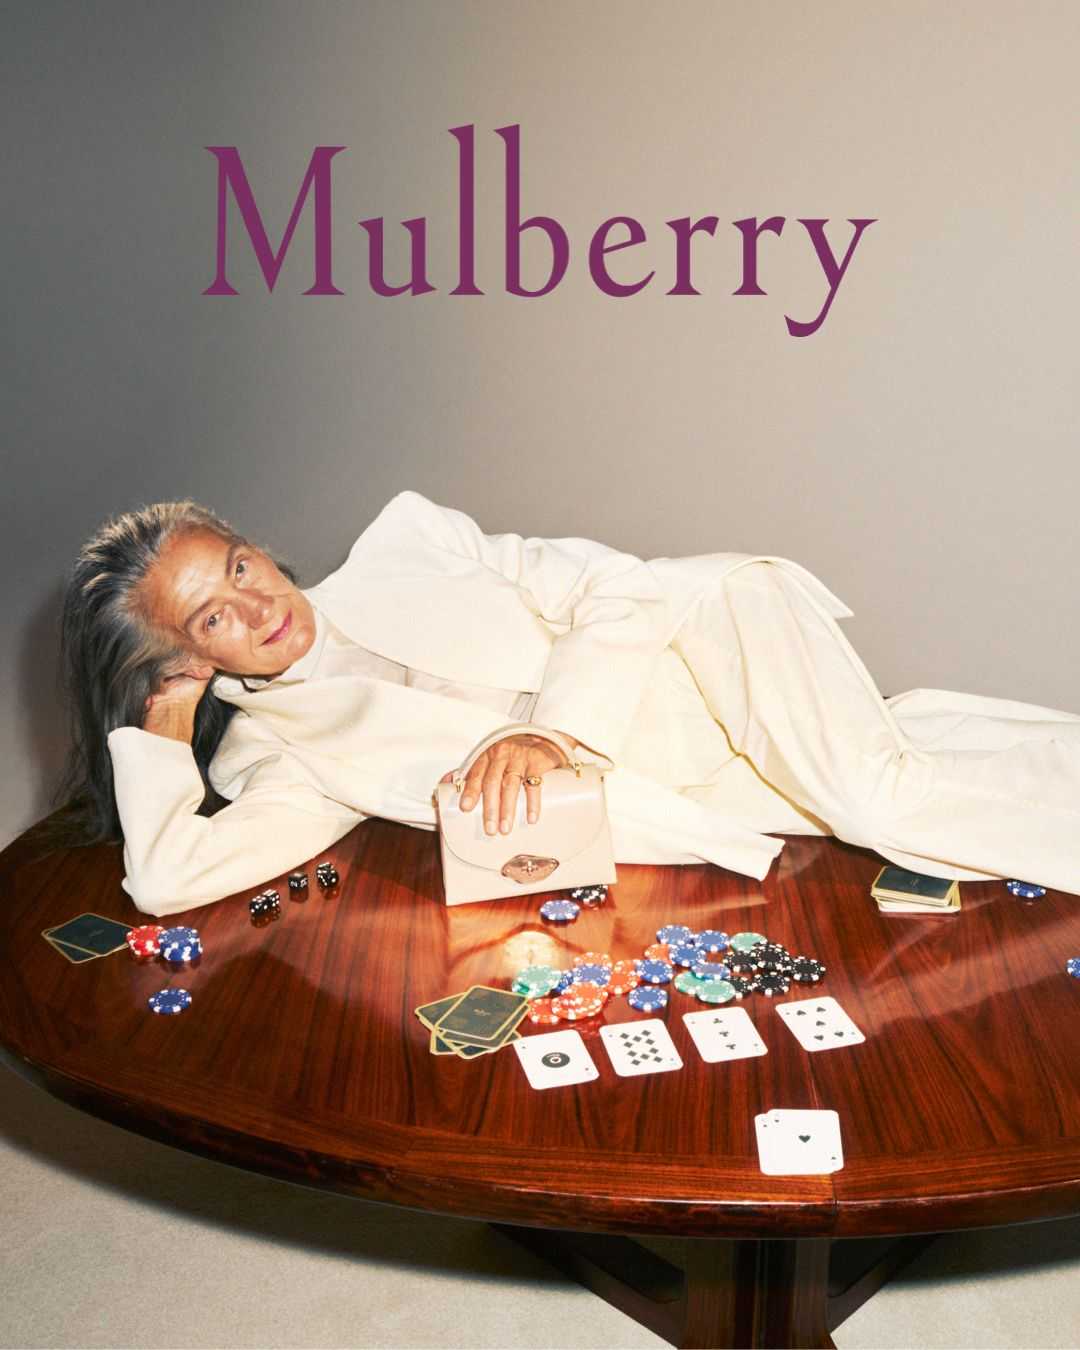 Mulberry - Anton Gotlob - 5892